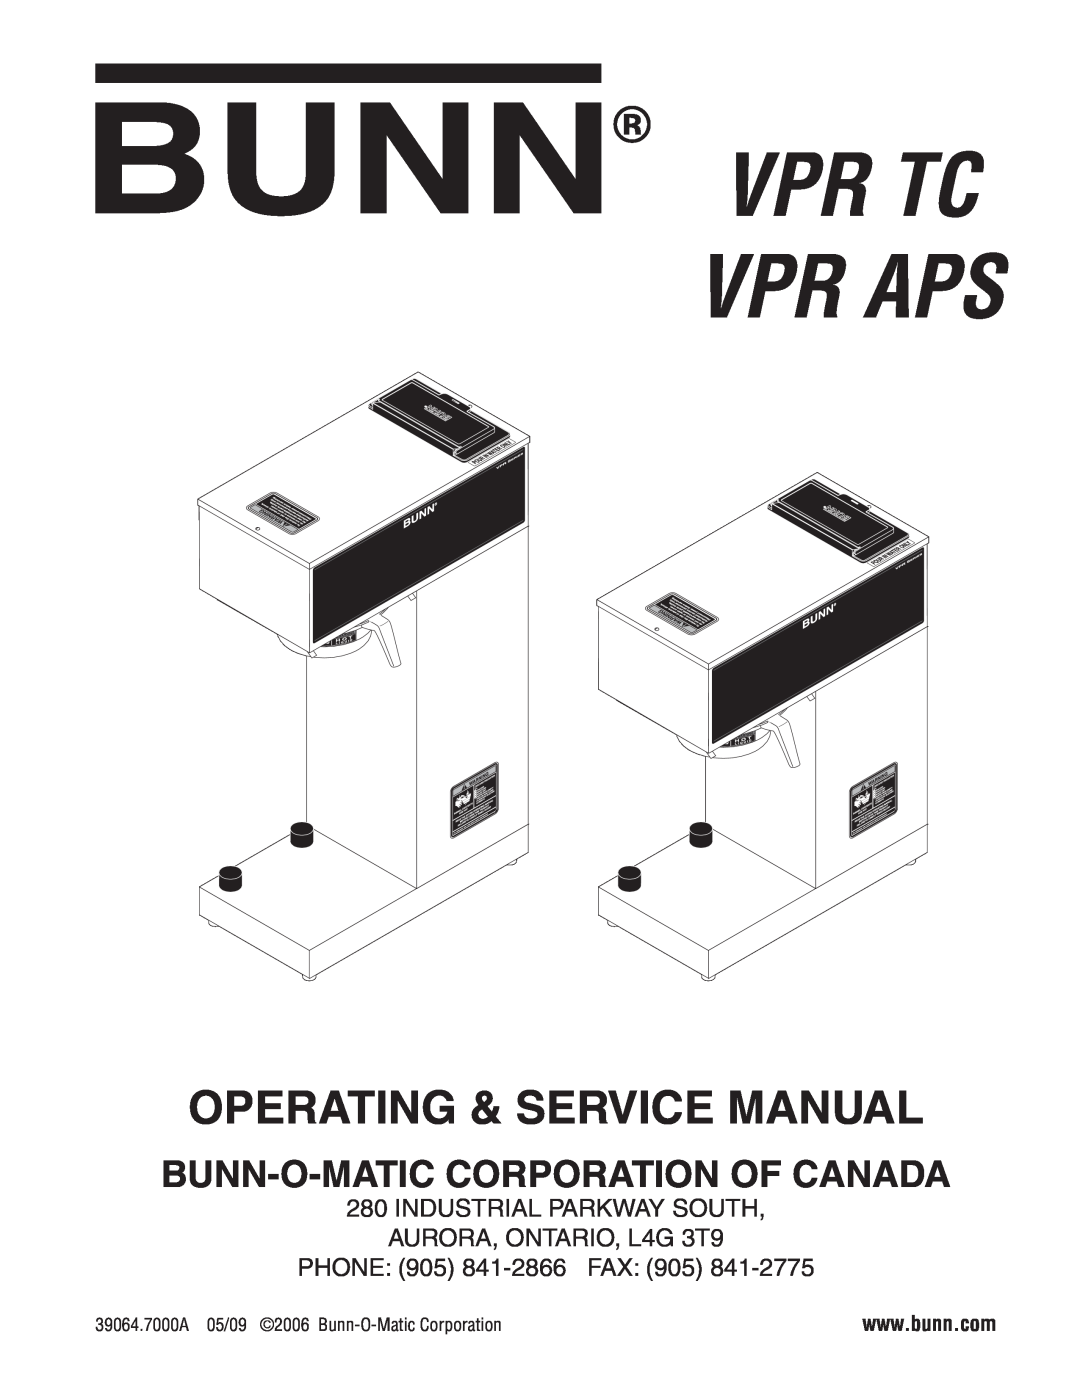 Bunn VPR APS service manual Vpr Tc Vpr Aps, Bunn-O-Matic Corporation Of Canada, Phone, Fax 